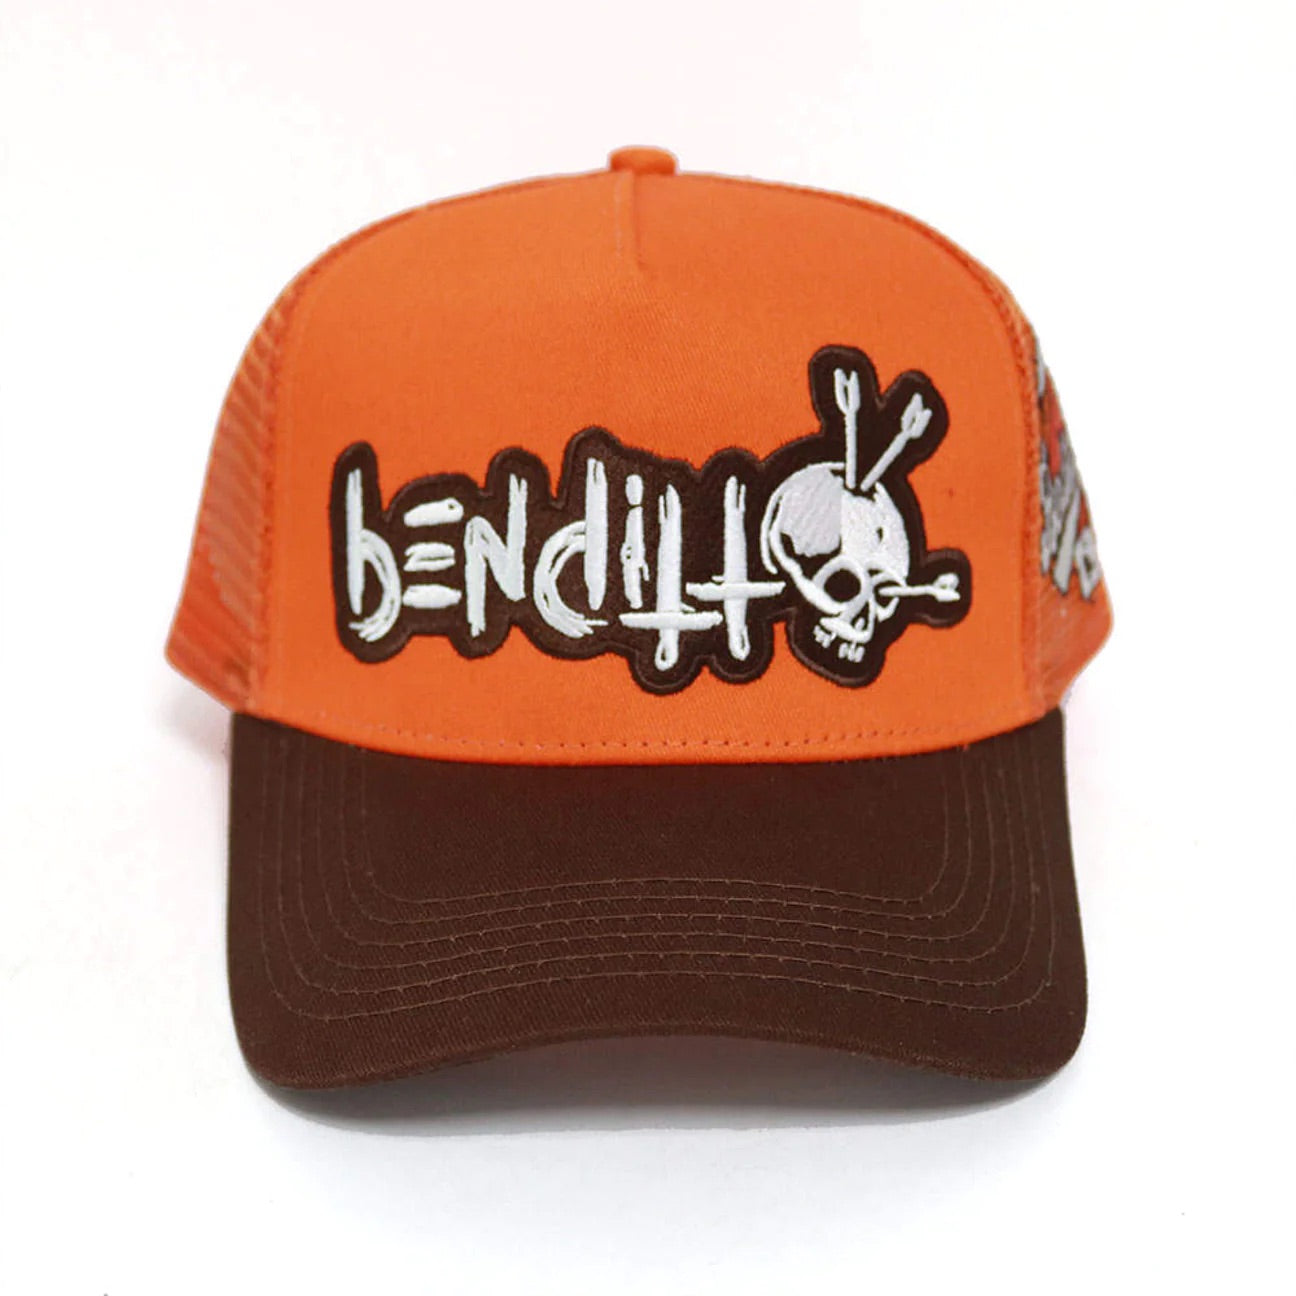 Benditto Trucker Hat (brown / orange)